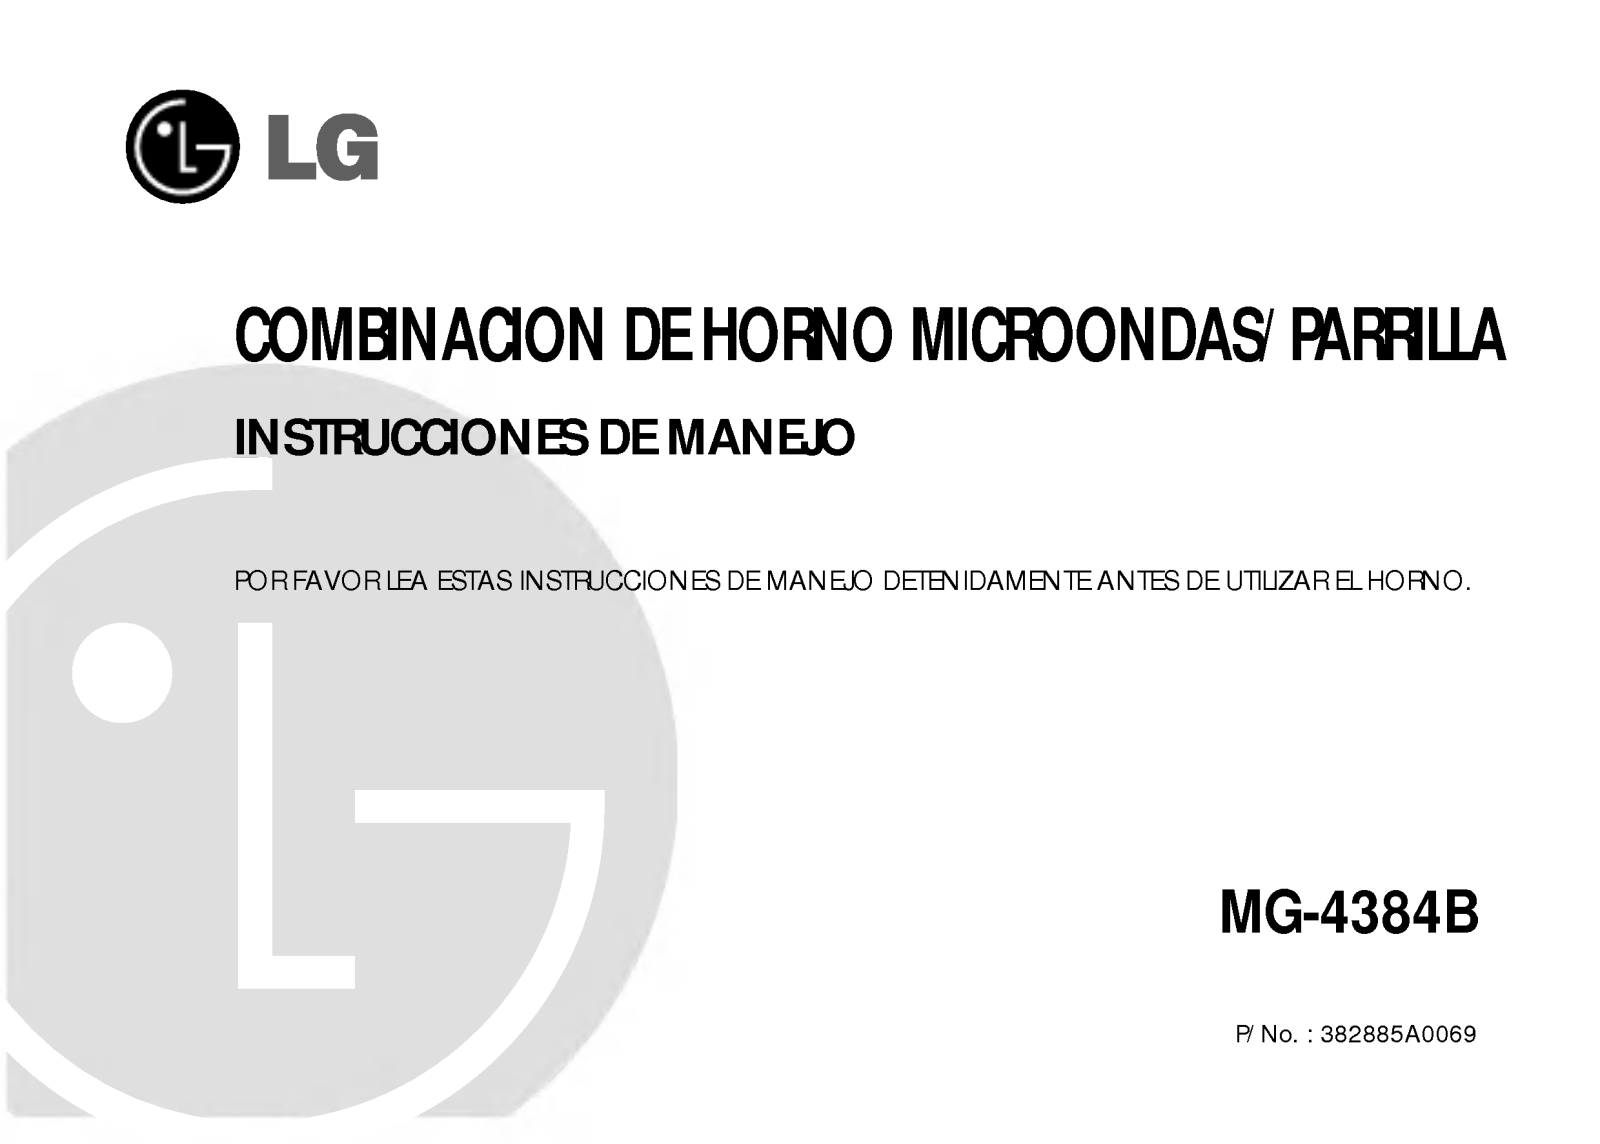 LG MB-4384B User Manual